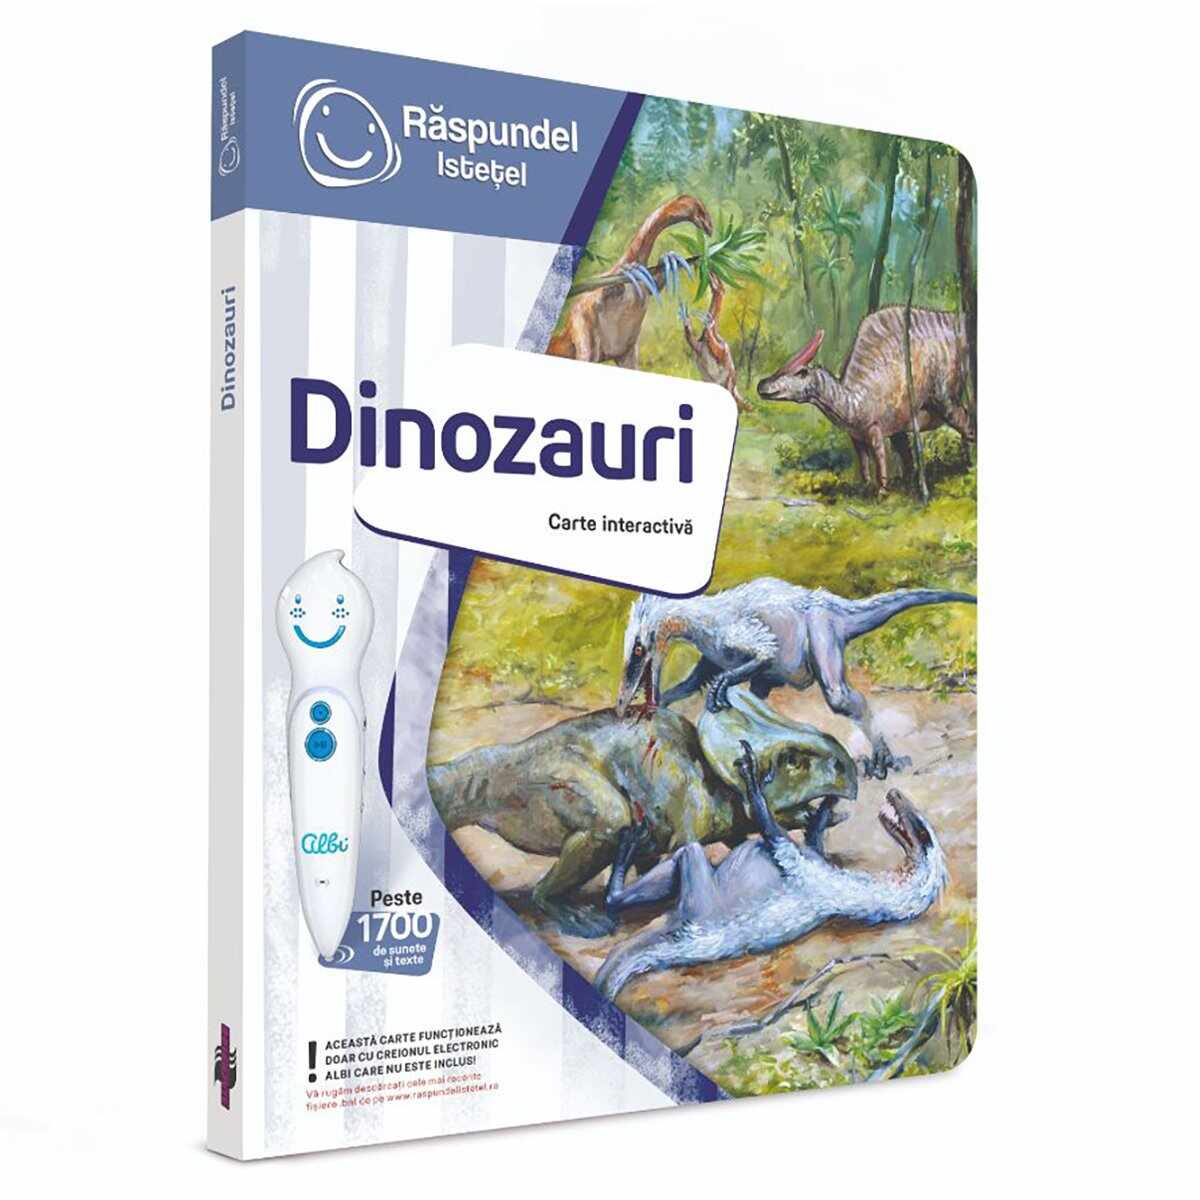 Carte interactiva, Raspundel Istetel, Dinozauri